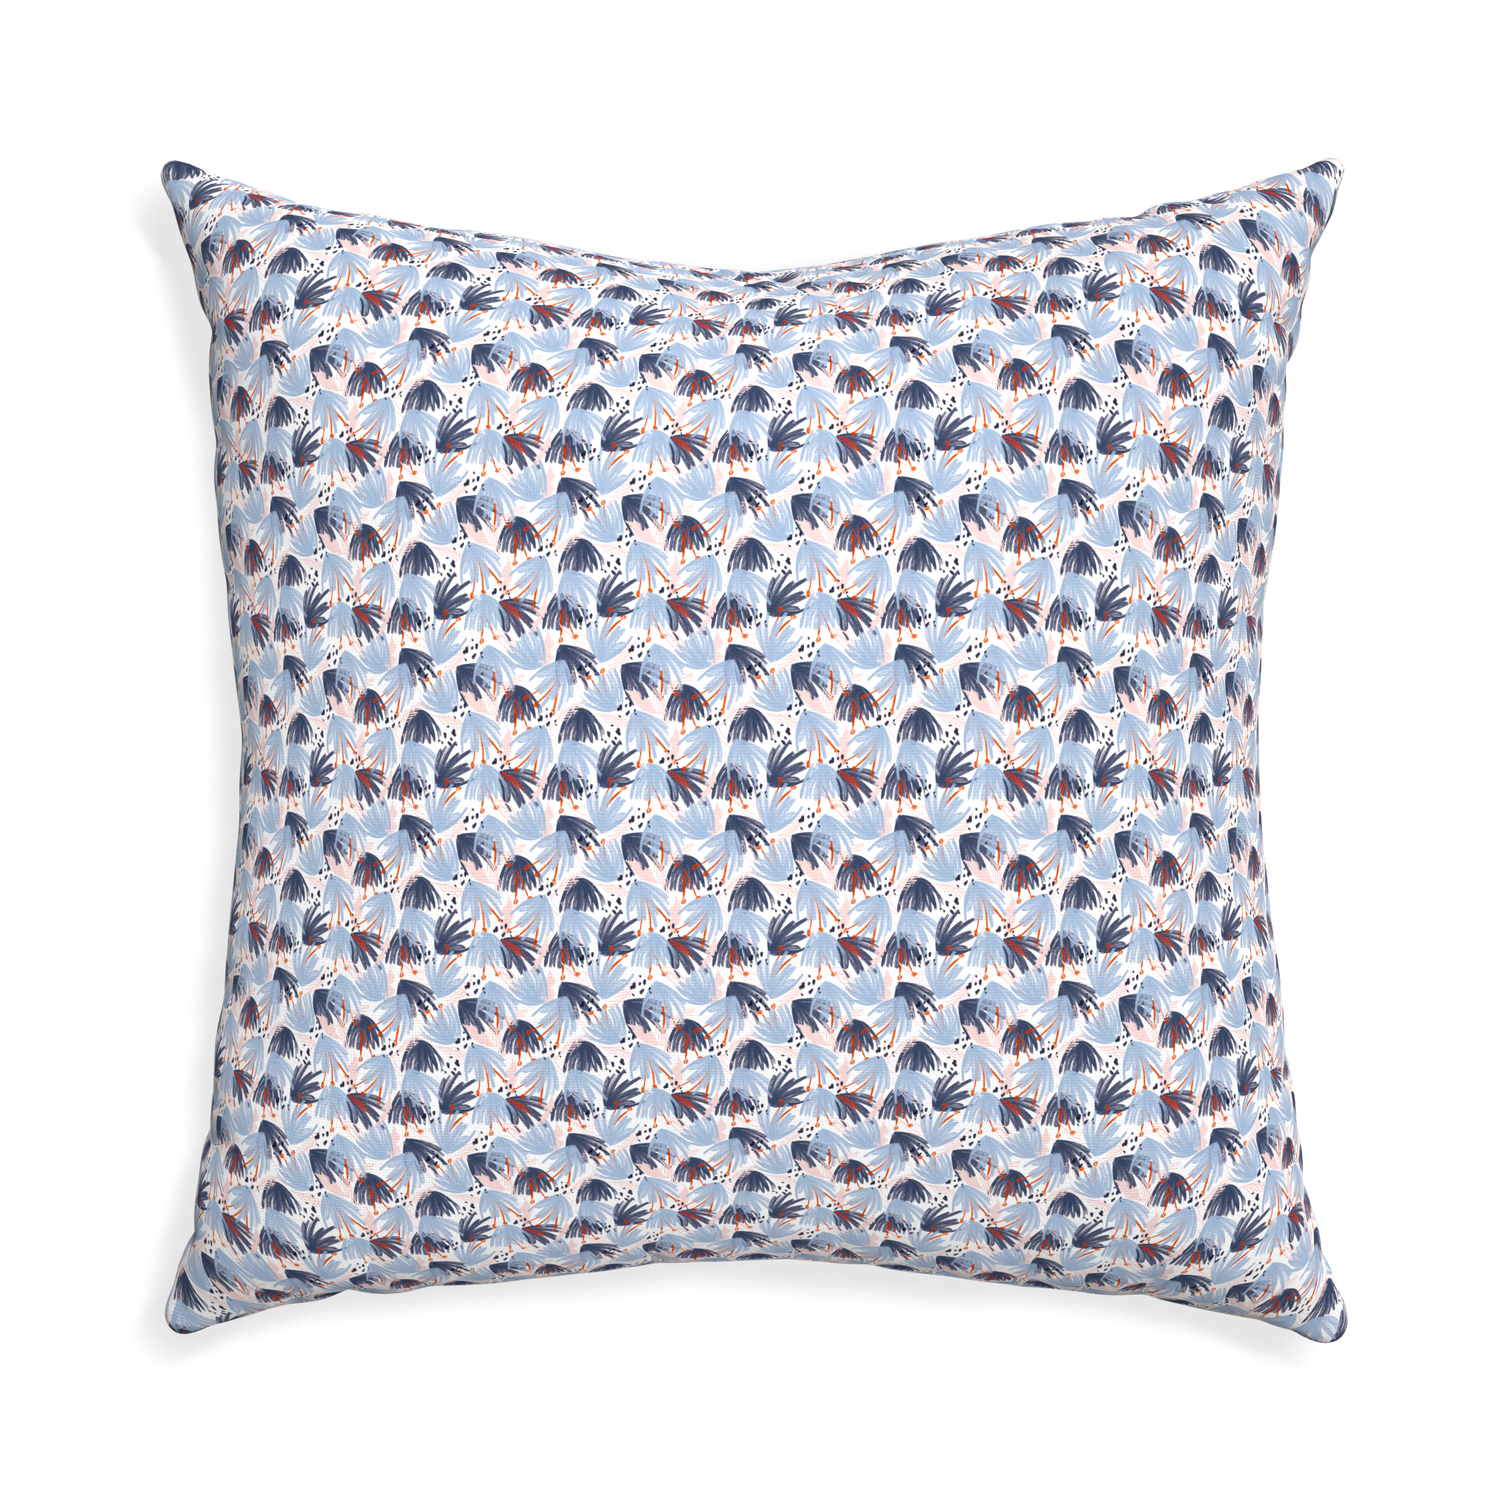 Euro-sham eden blue custom pillow with none on white background